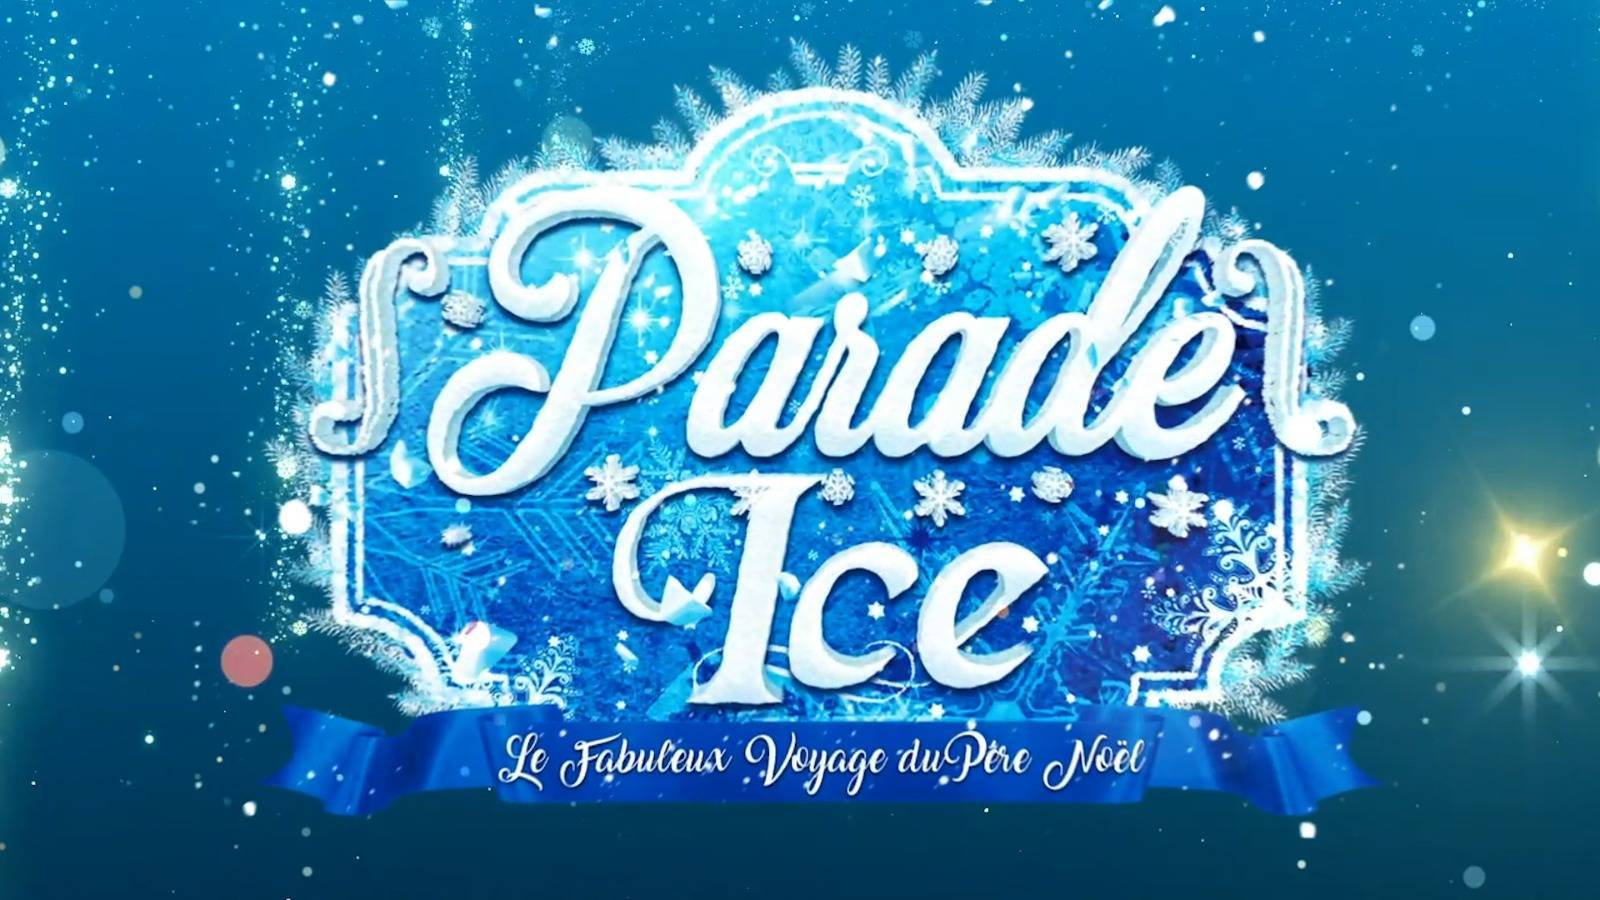 Parade Ice